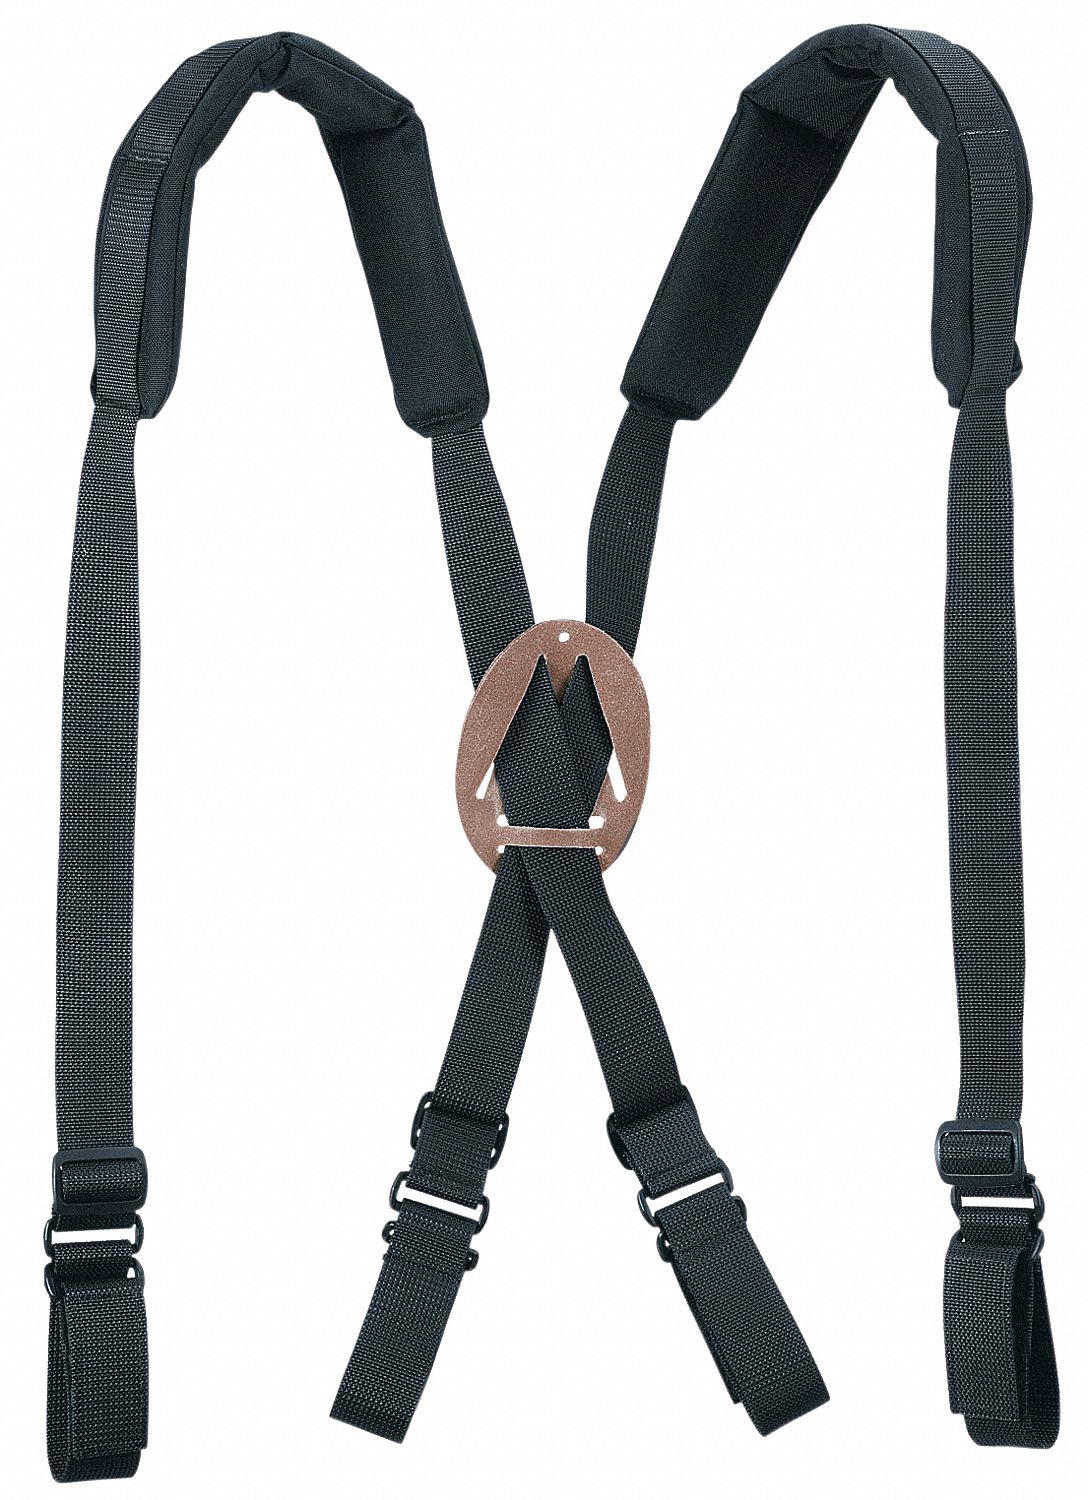 2DGJ4 - Suspenders Black Universal Adjustable